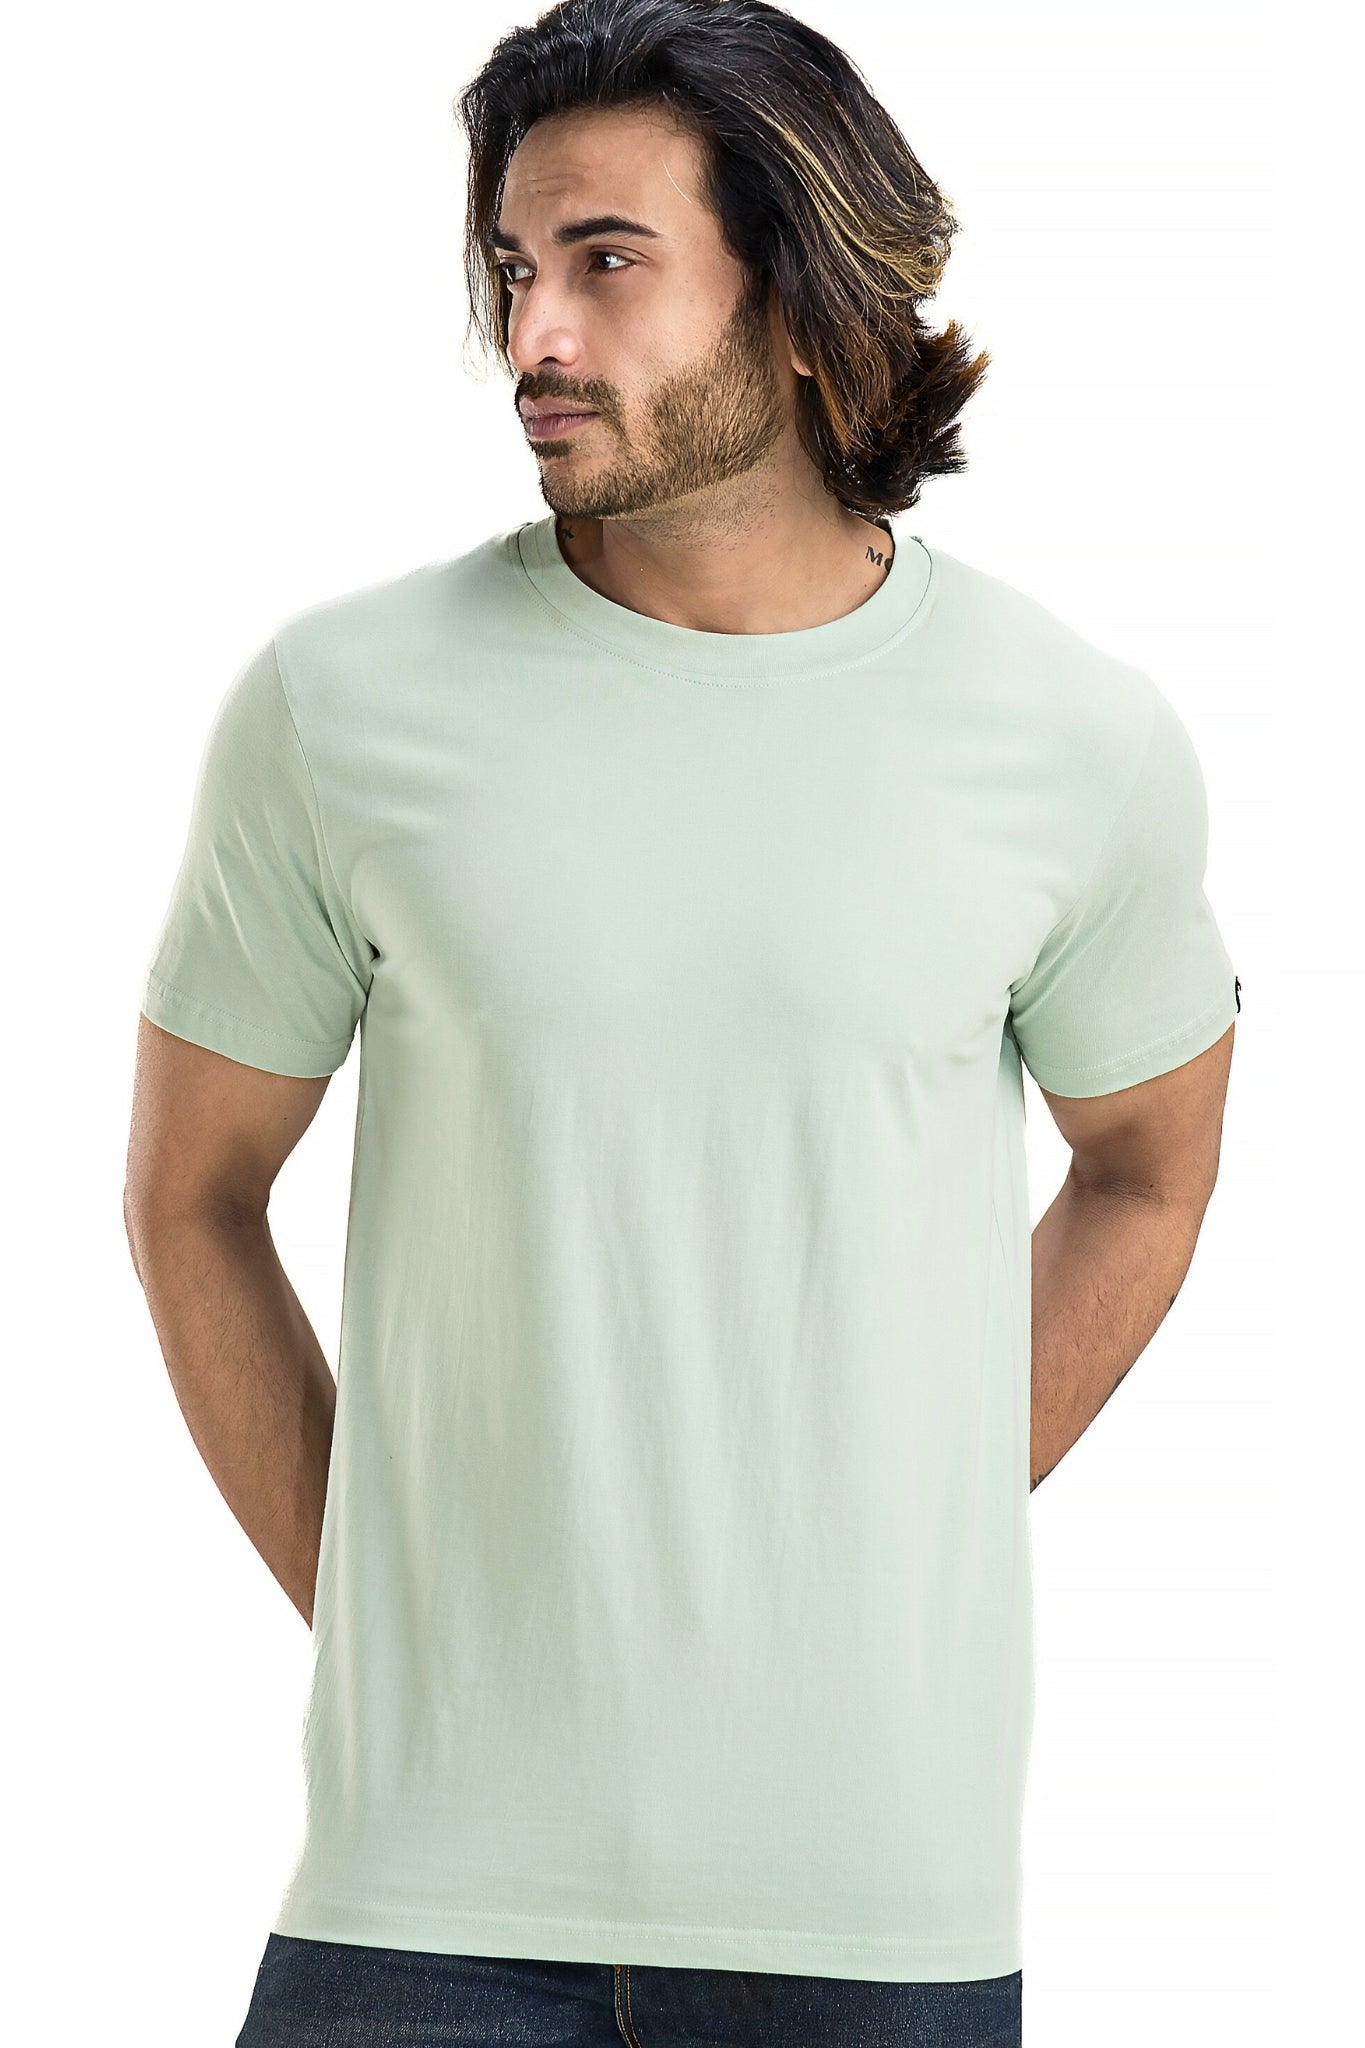 Men's Solid Basic Light Sea Green T-Shirt